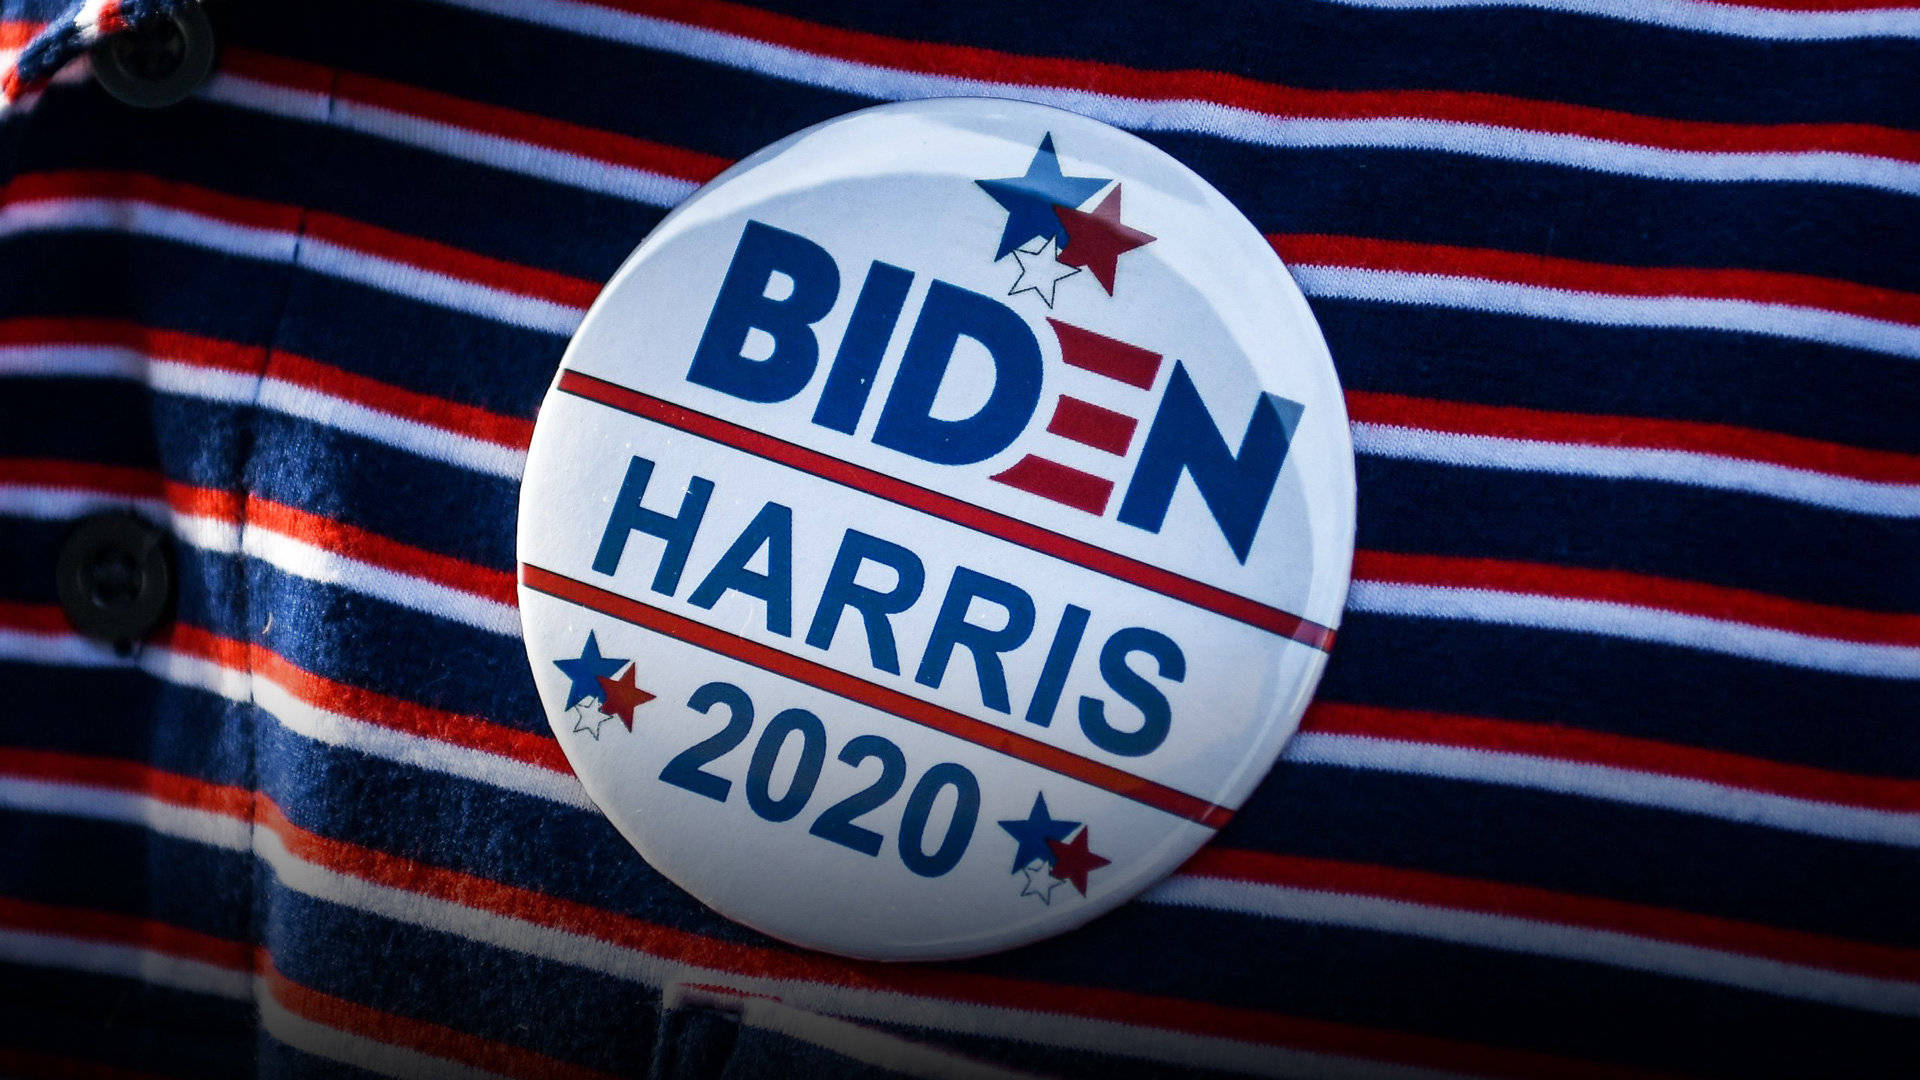 Joe Biden And Harris 2020 Pin